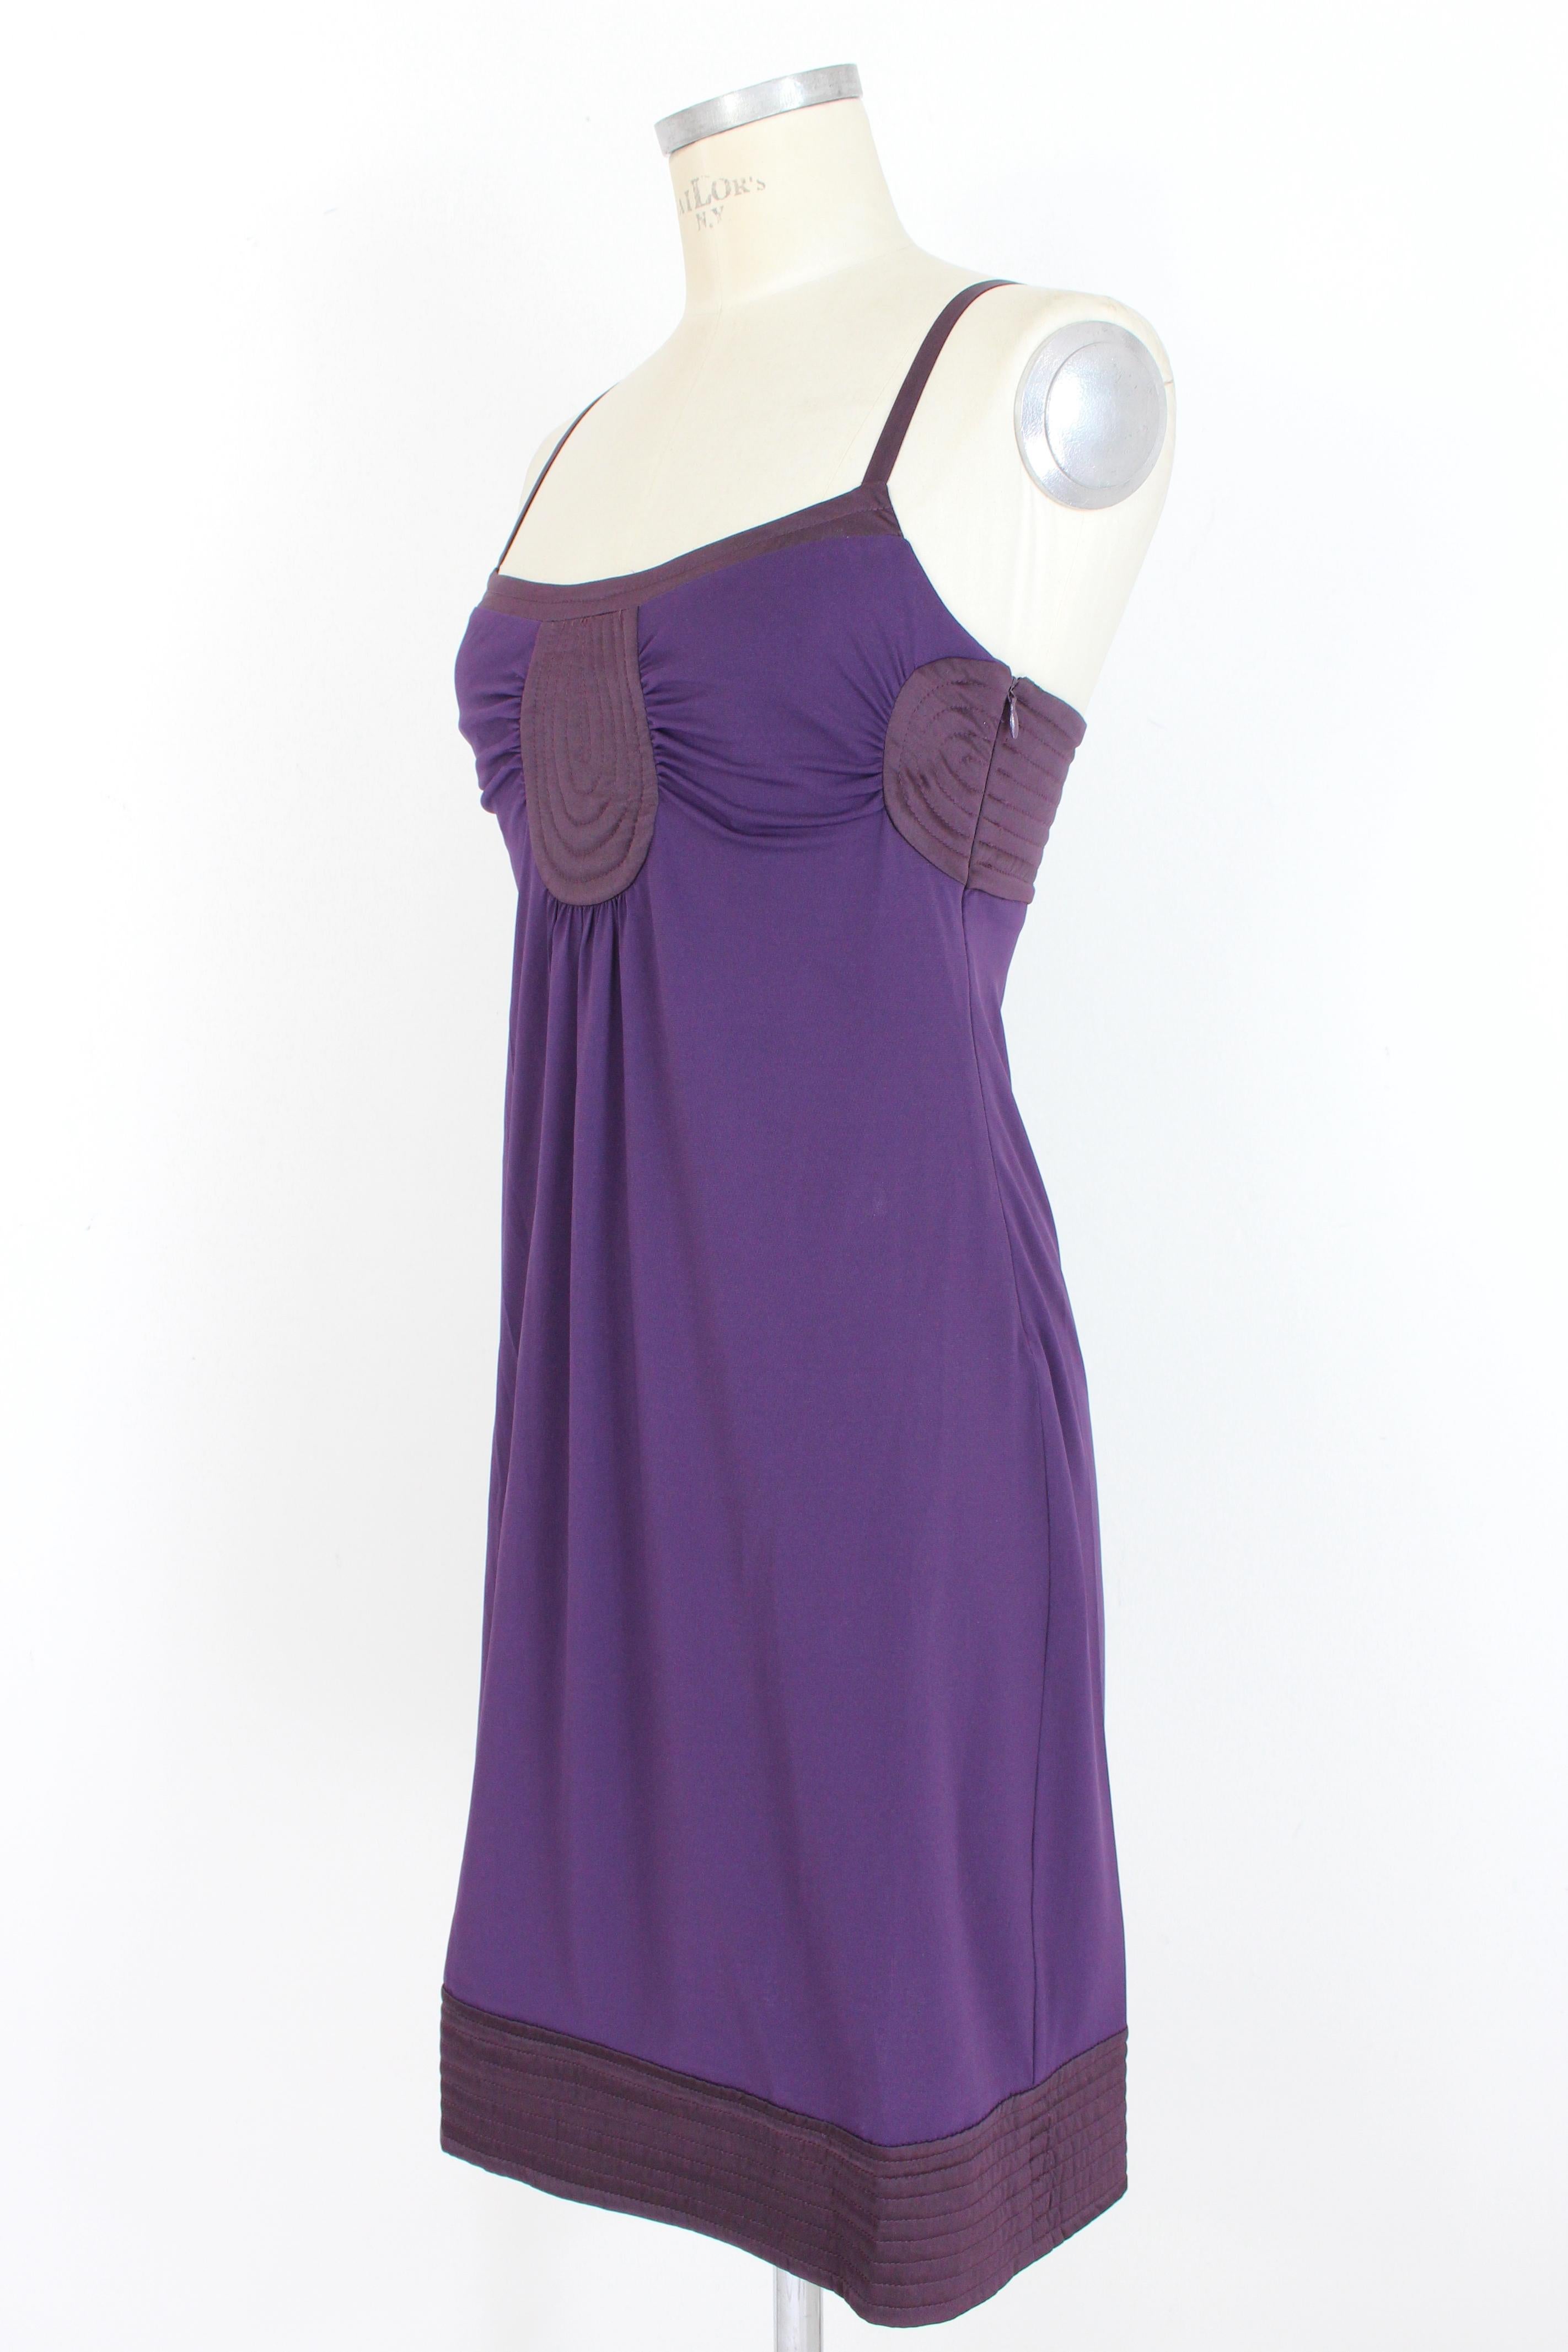 Women's Alberta Ferretti Purple Silk Evening Sheath Dress For Sale